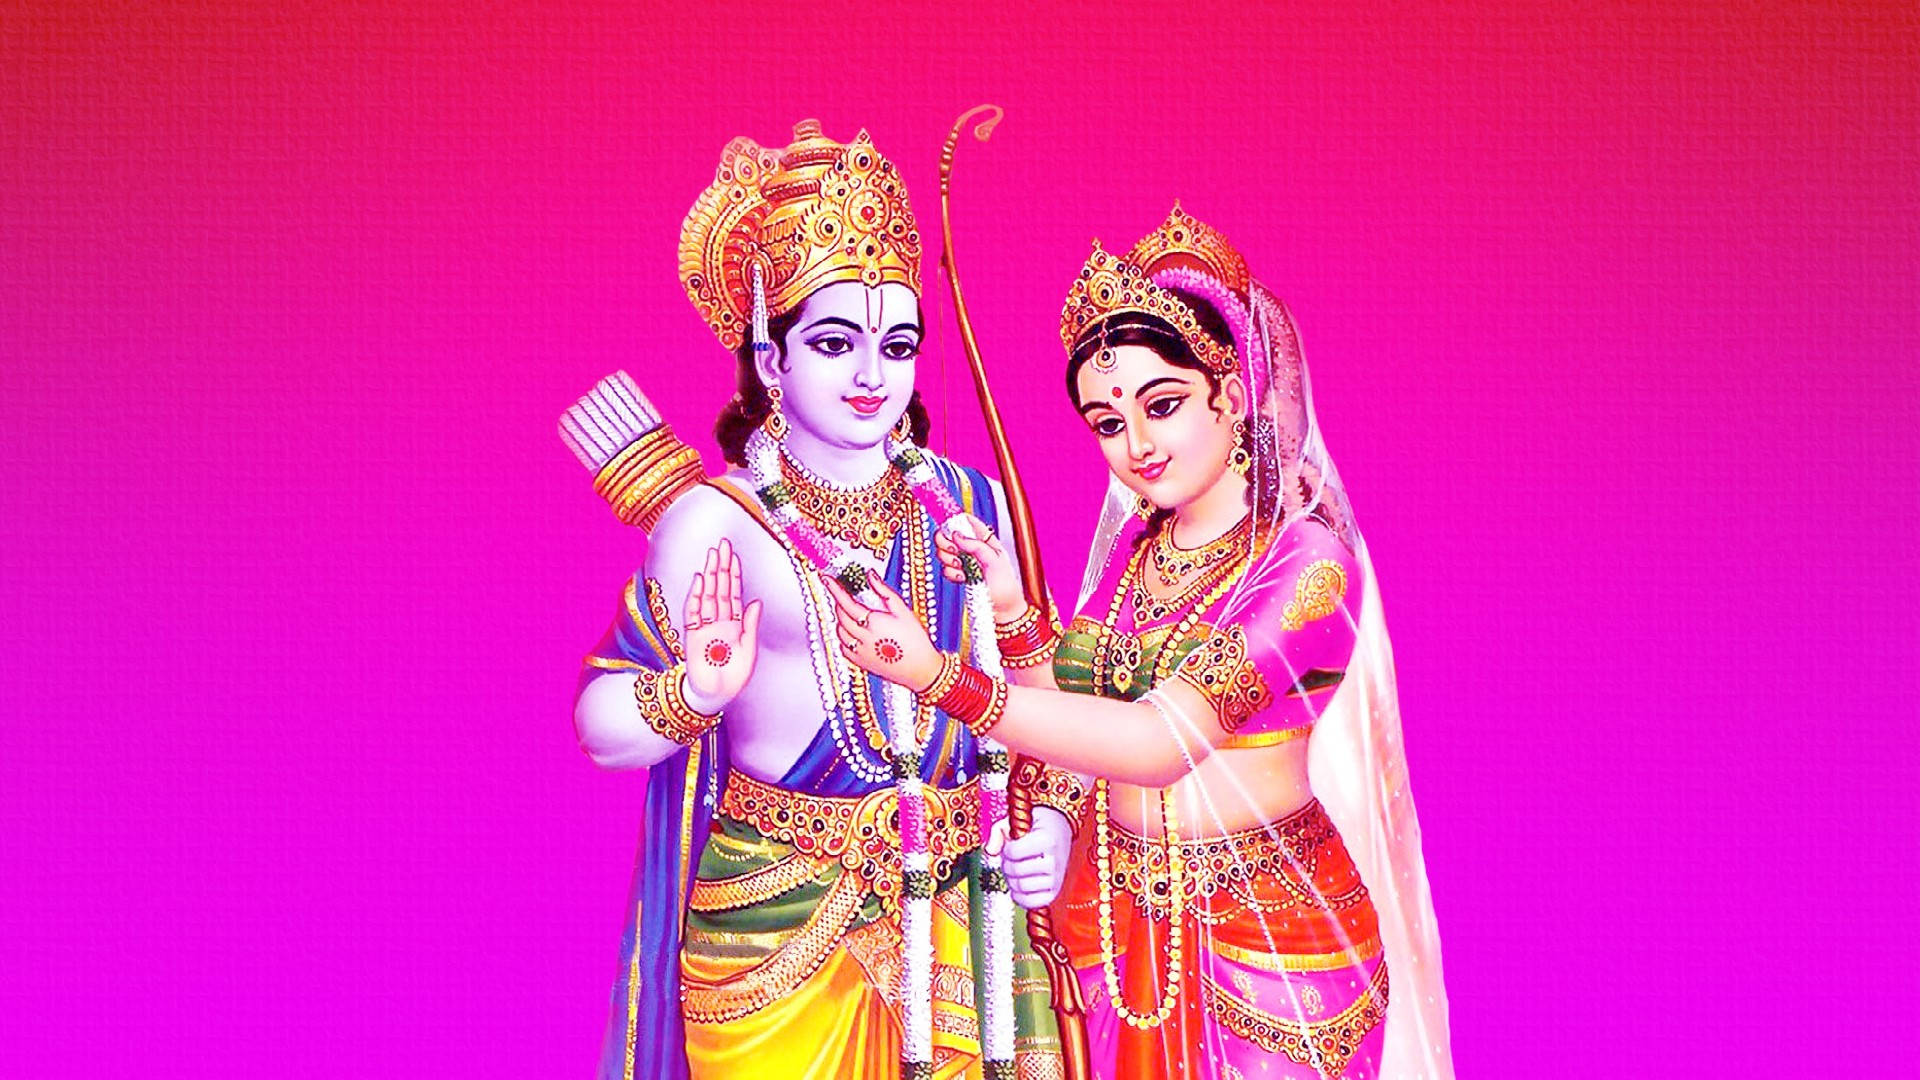 Ram Sita Reddish Pink Background